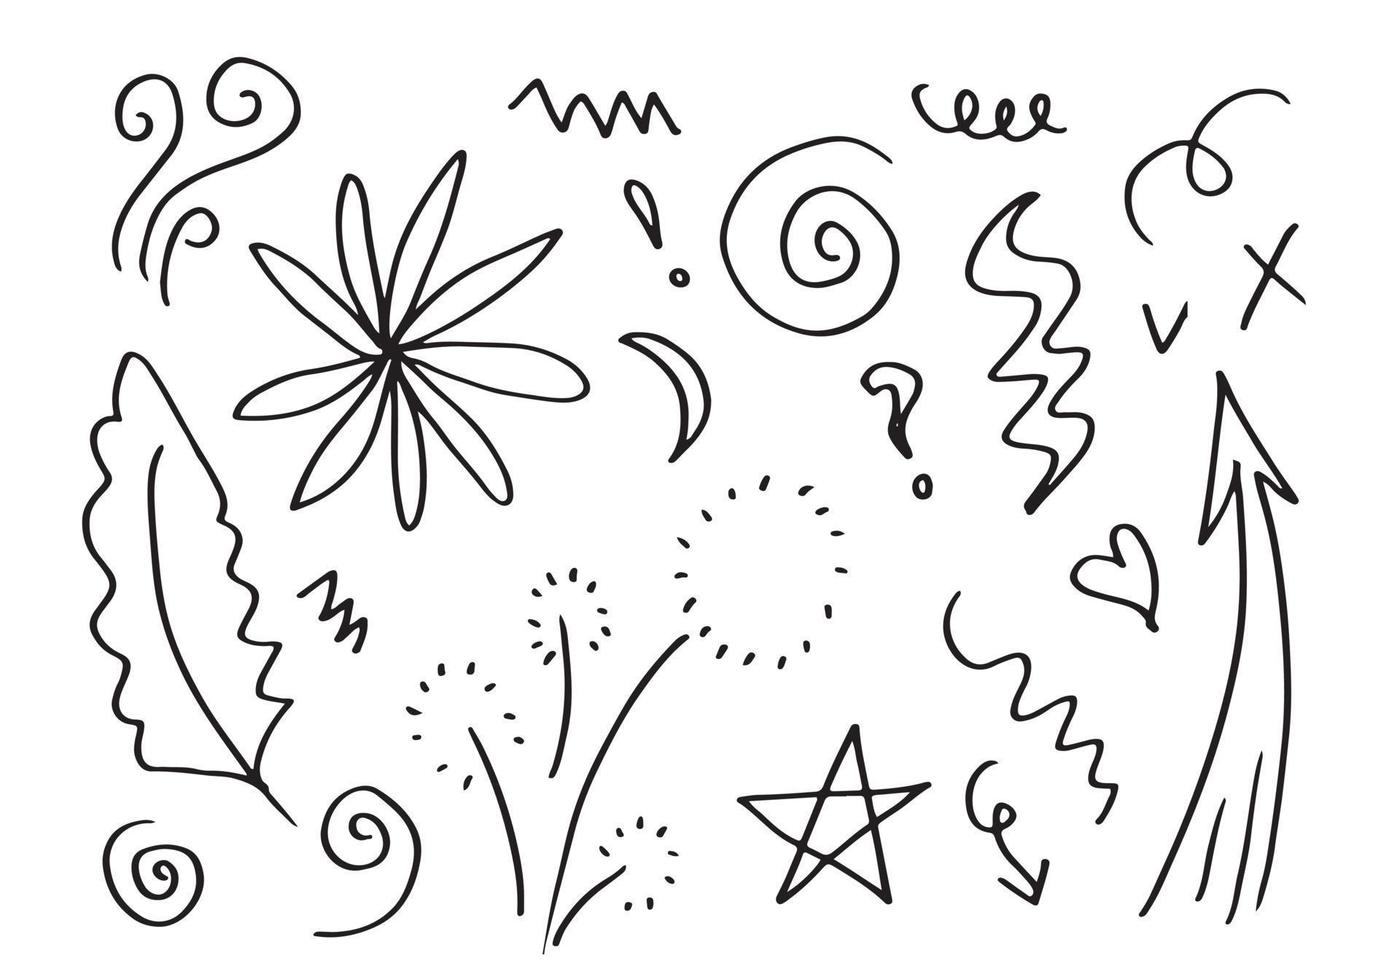 hand drawn set element,black on white background.arrow,leaves,star,heart,light,emphasis,swirl,for concept design. vector